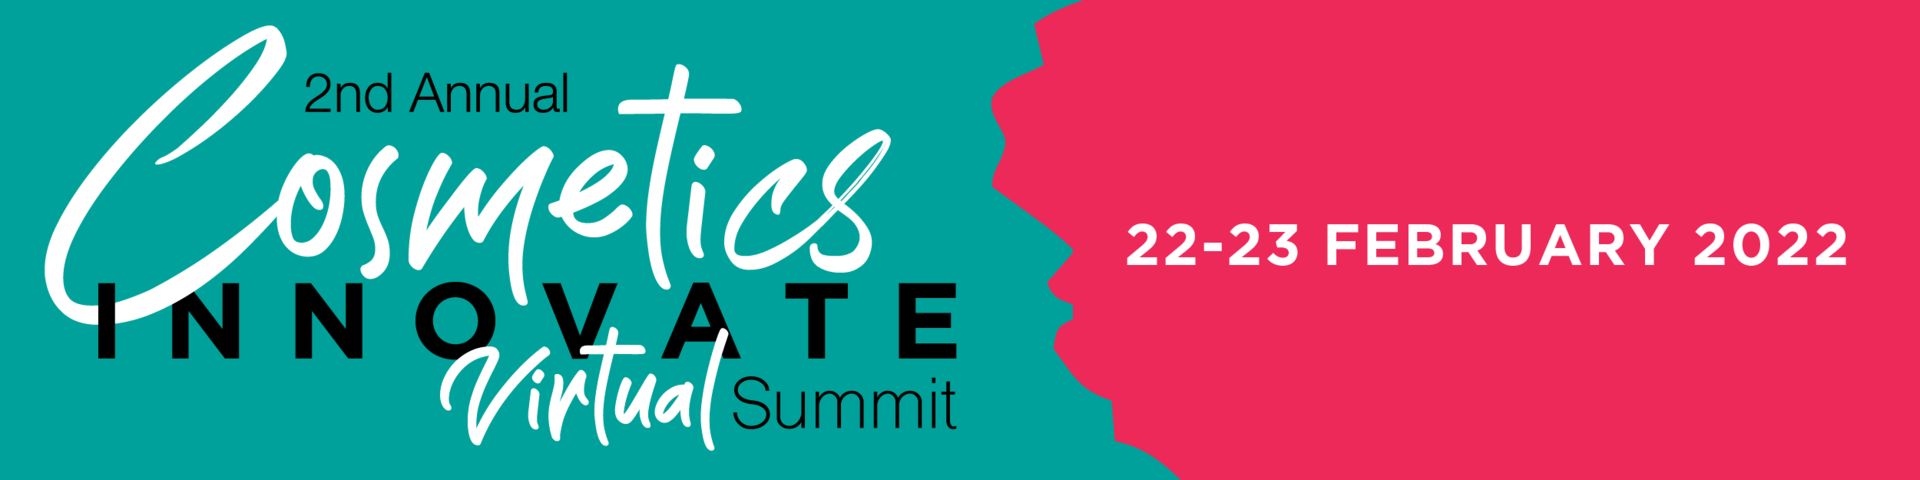 Cosmetics Innovate Virtual Summit, 22 - 23 February 2022, Online Event